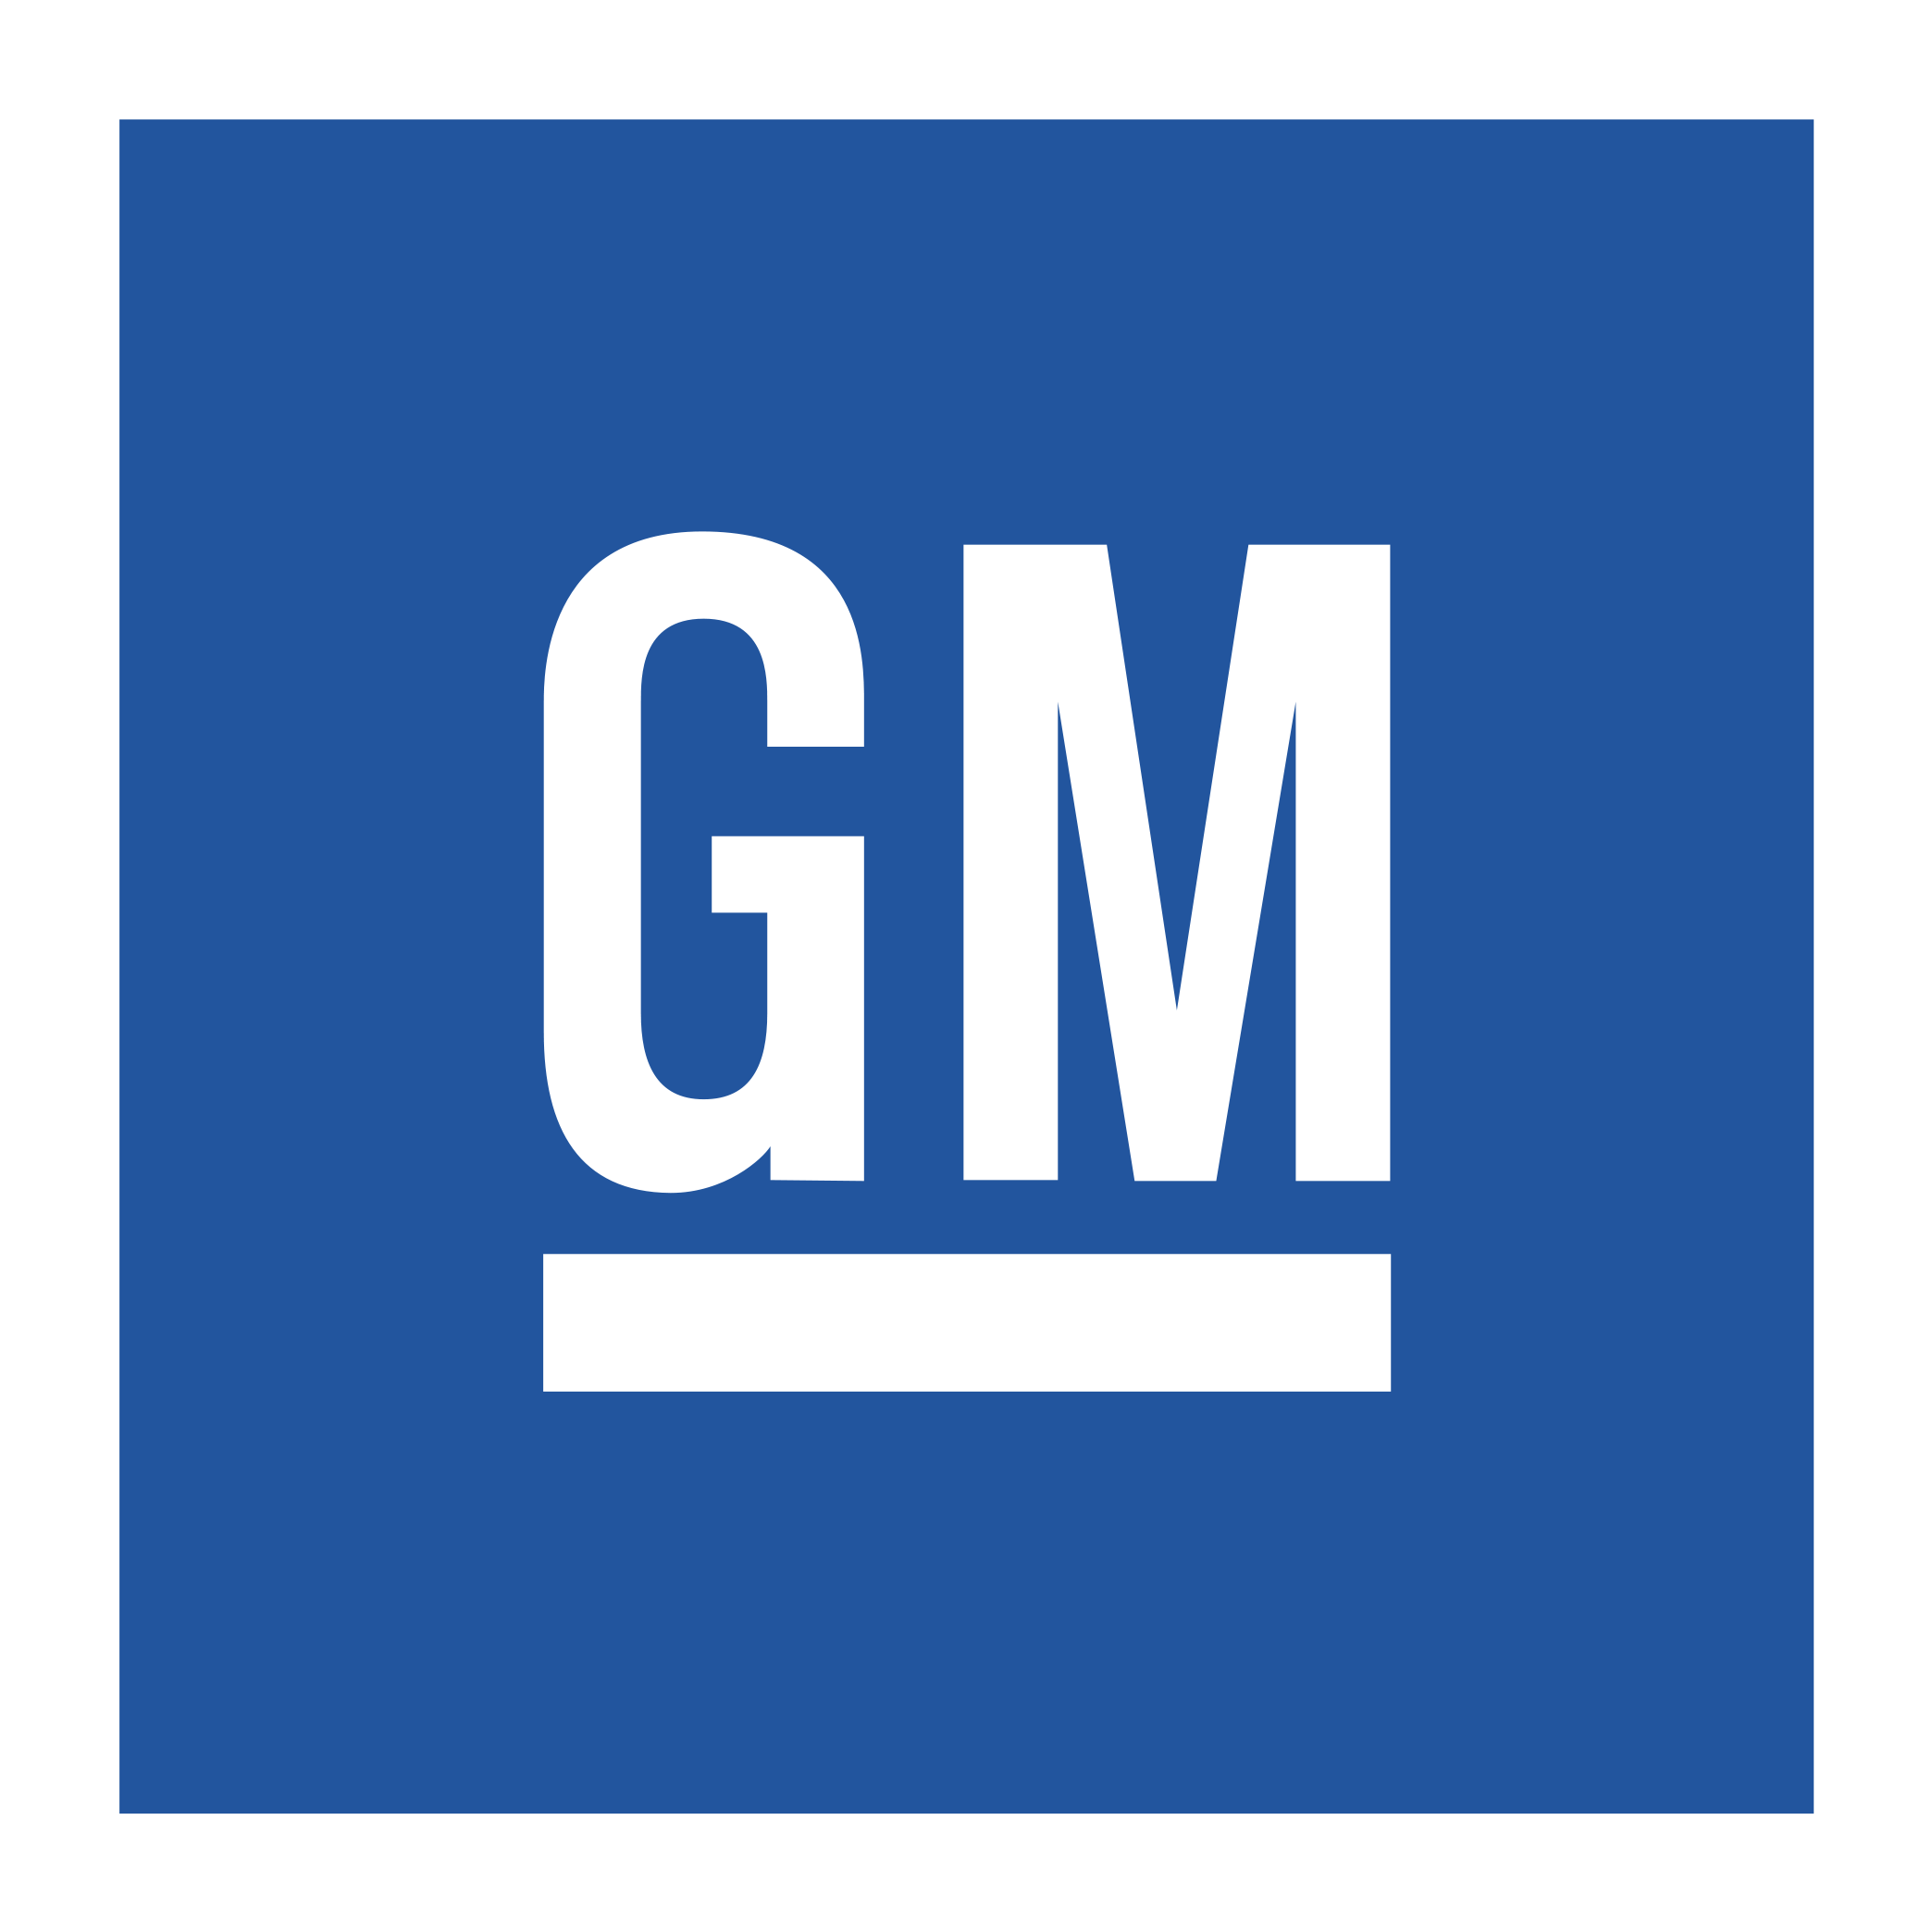 General Motors Logo PNG Image PurePNG Free transparent CC0 PNG